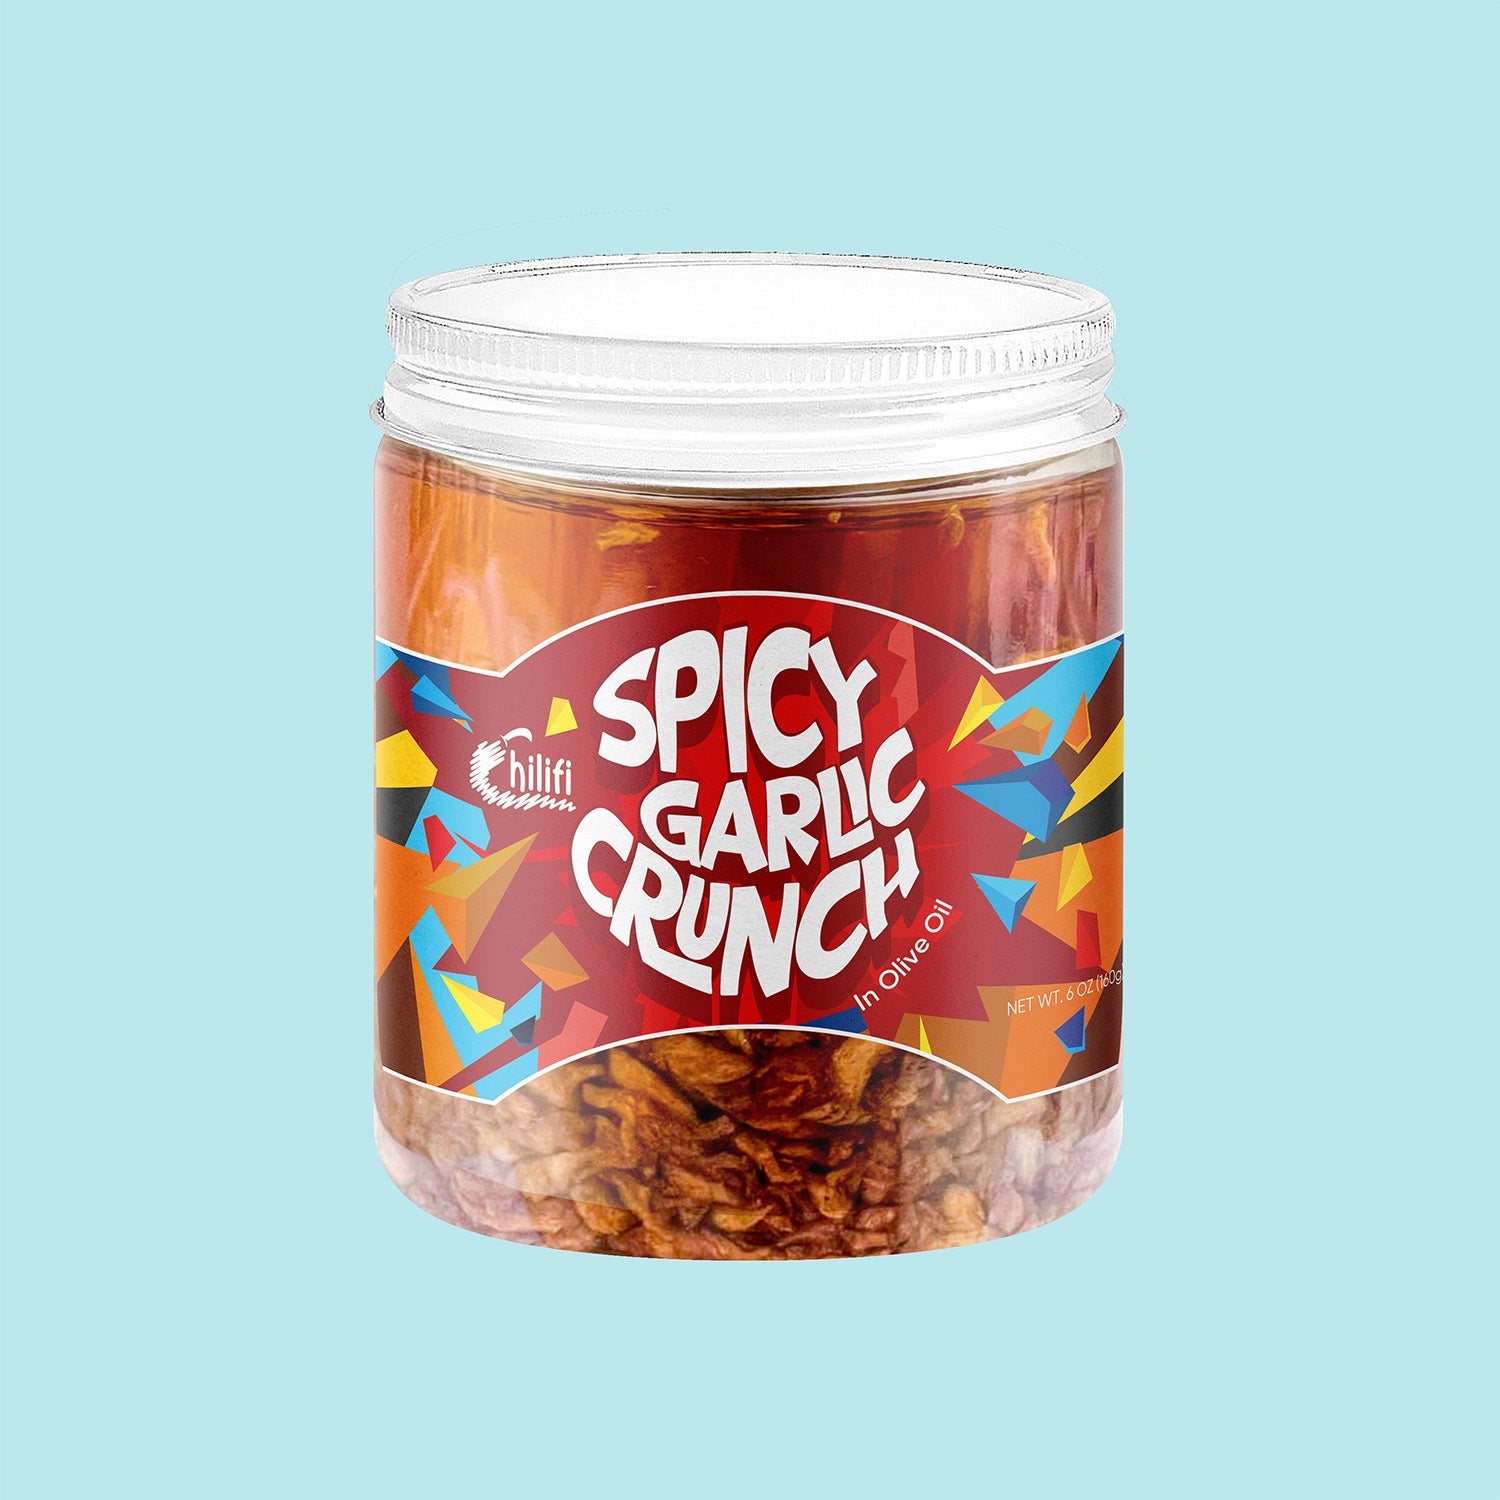 Chilifi Spicy Garlic Crunch - Nordic Catch